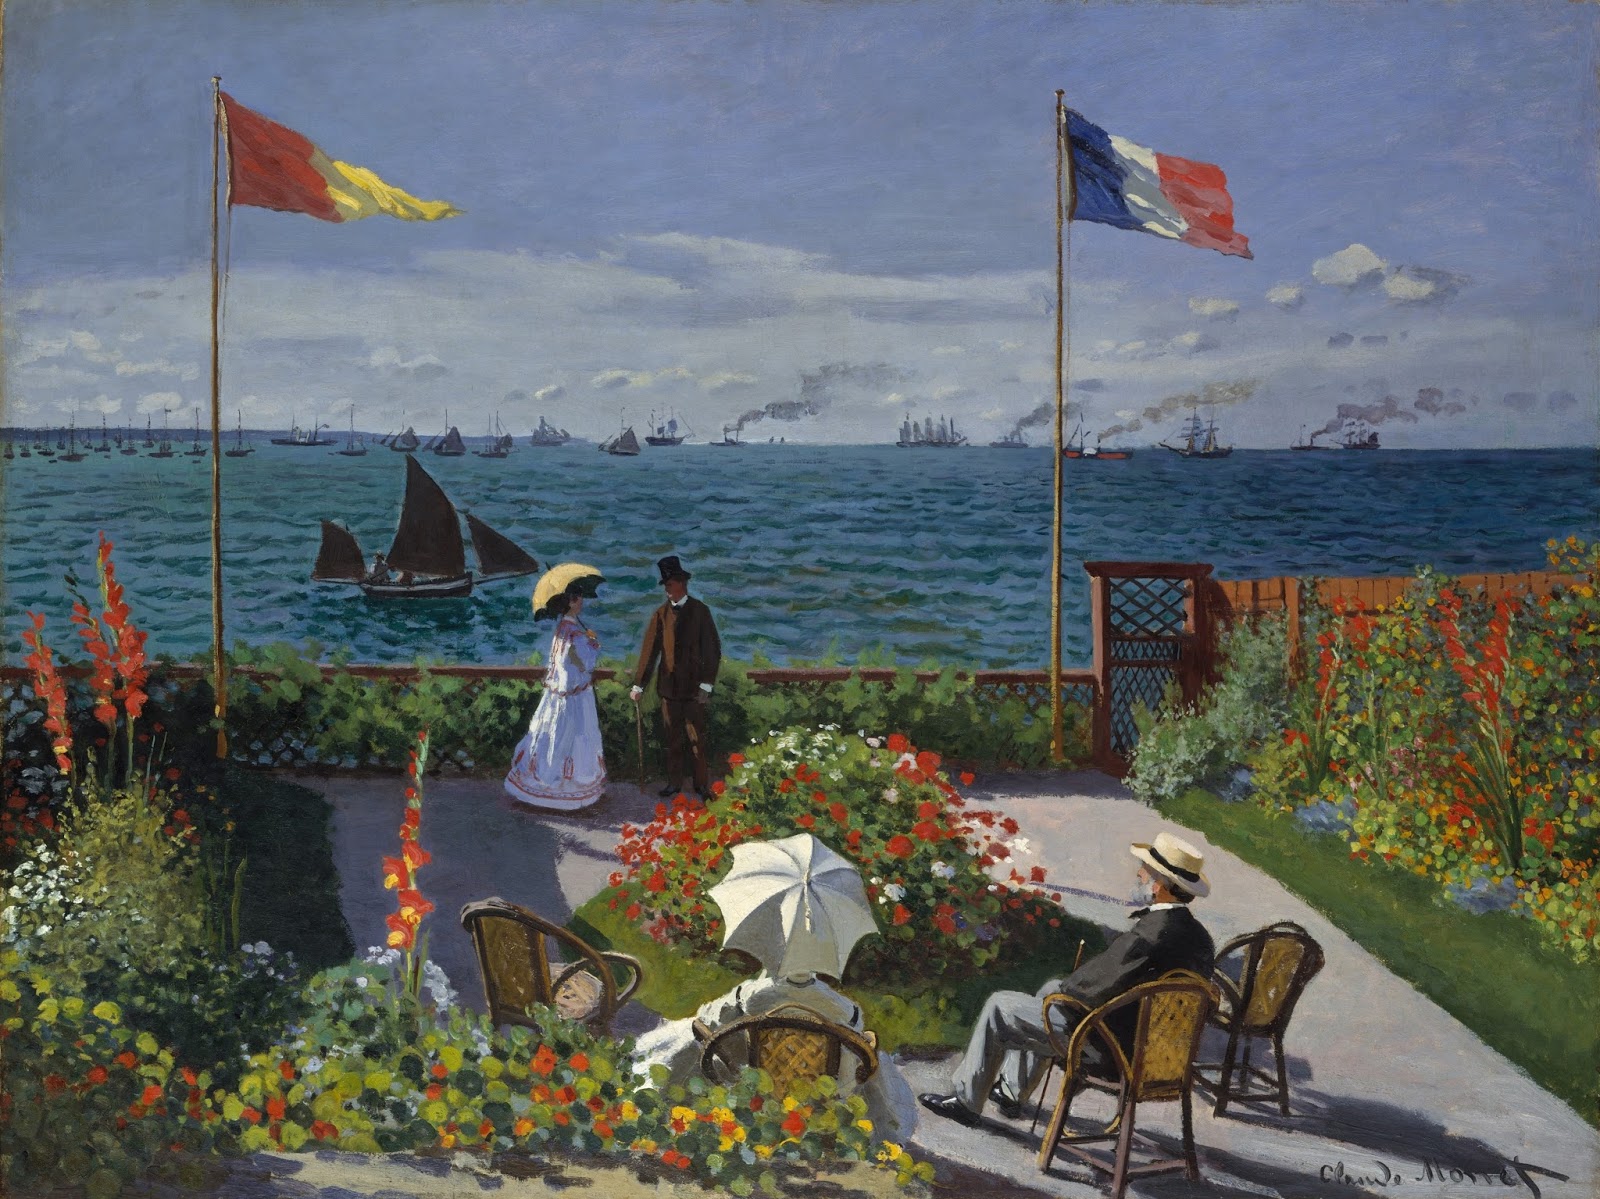 Claude+Monet-1840-1926 (338).jpg